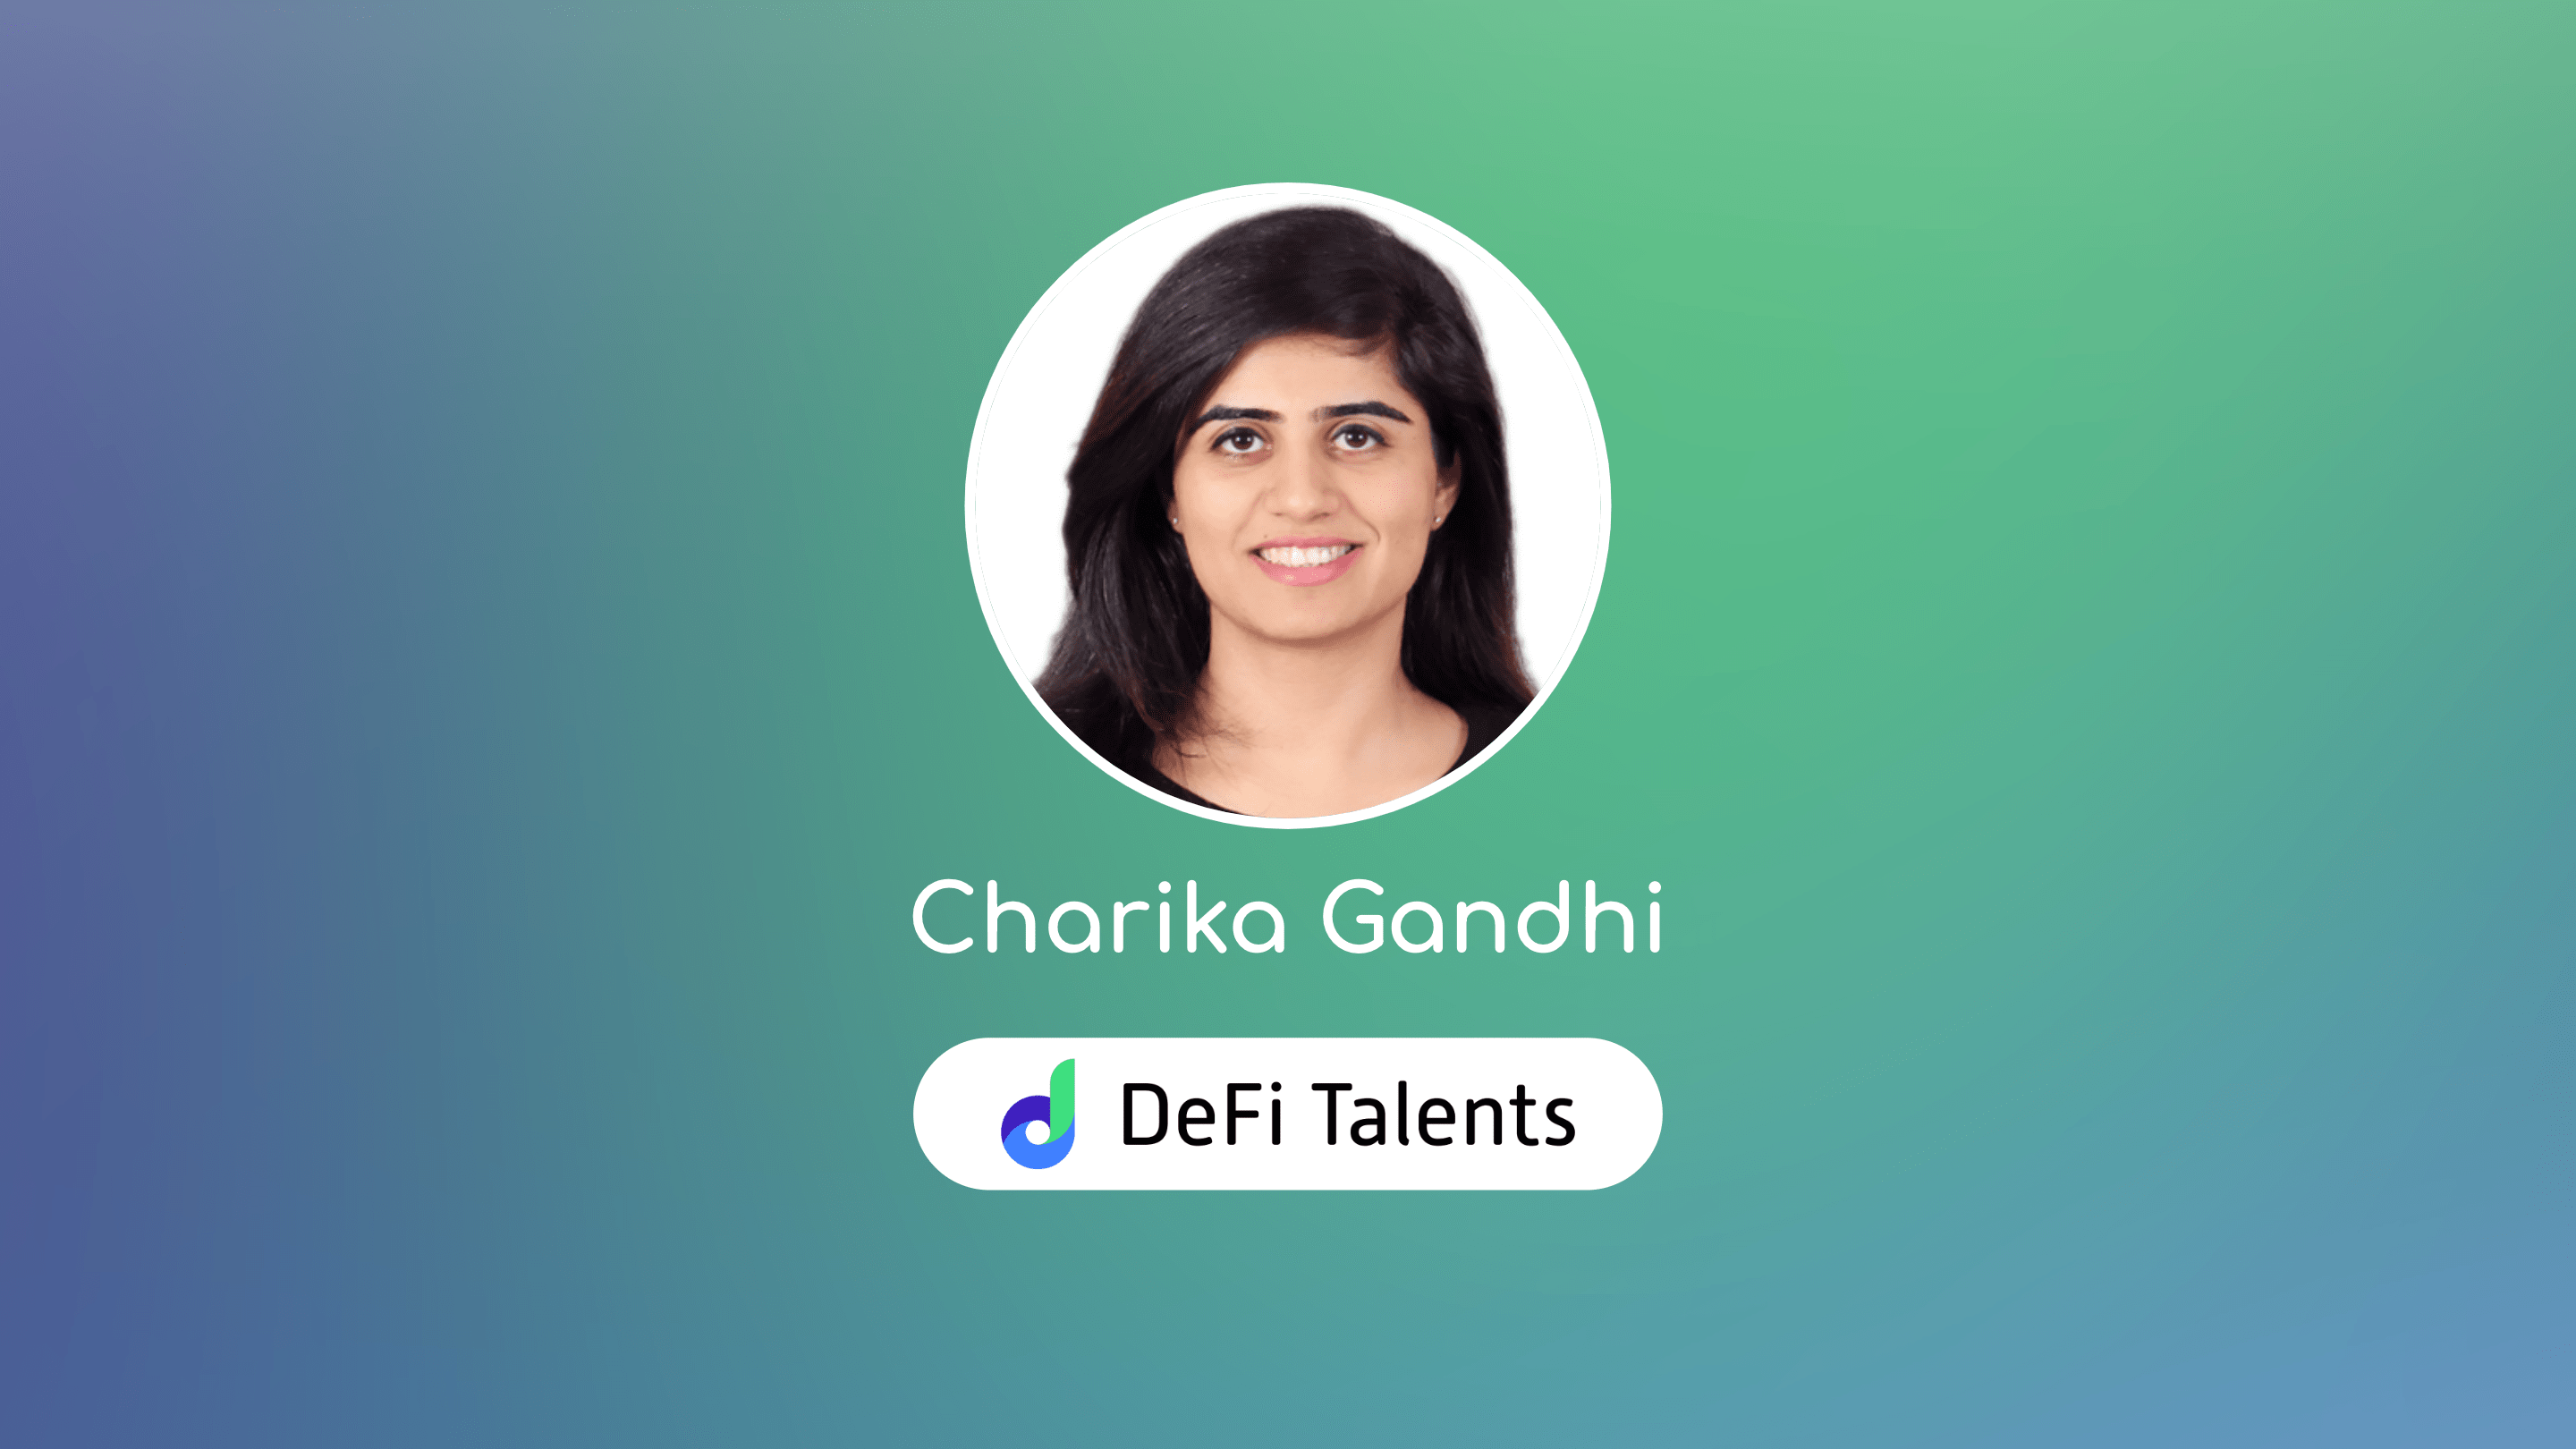 DeFi Talents Mentor – Charika Gandhi